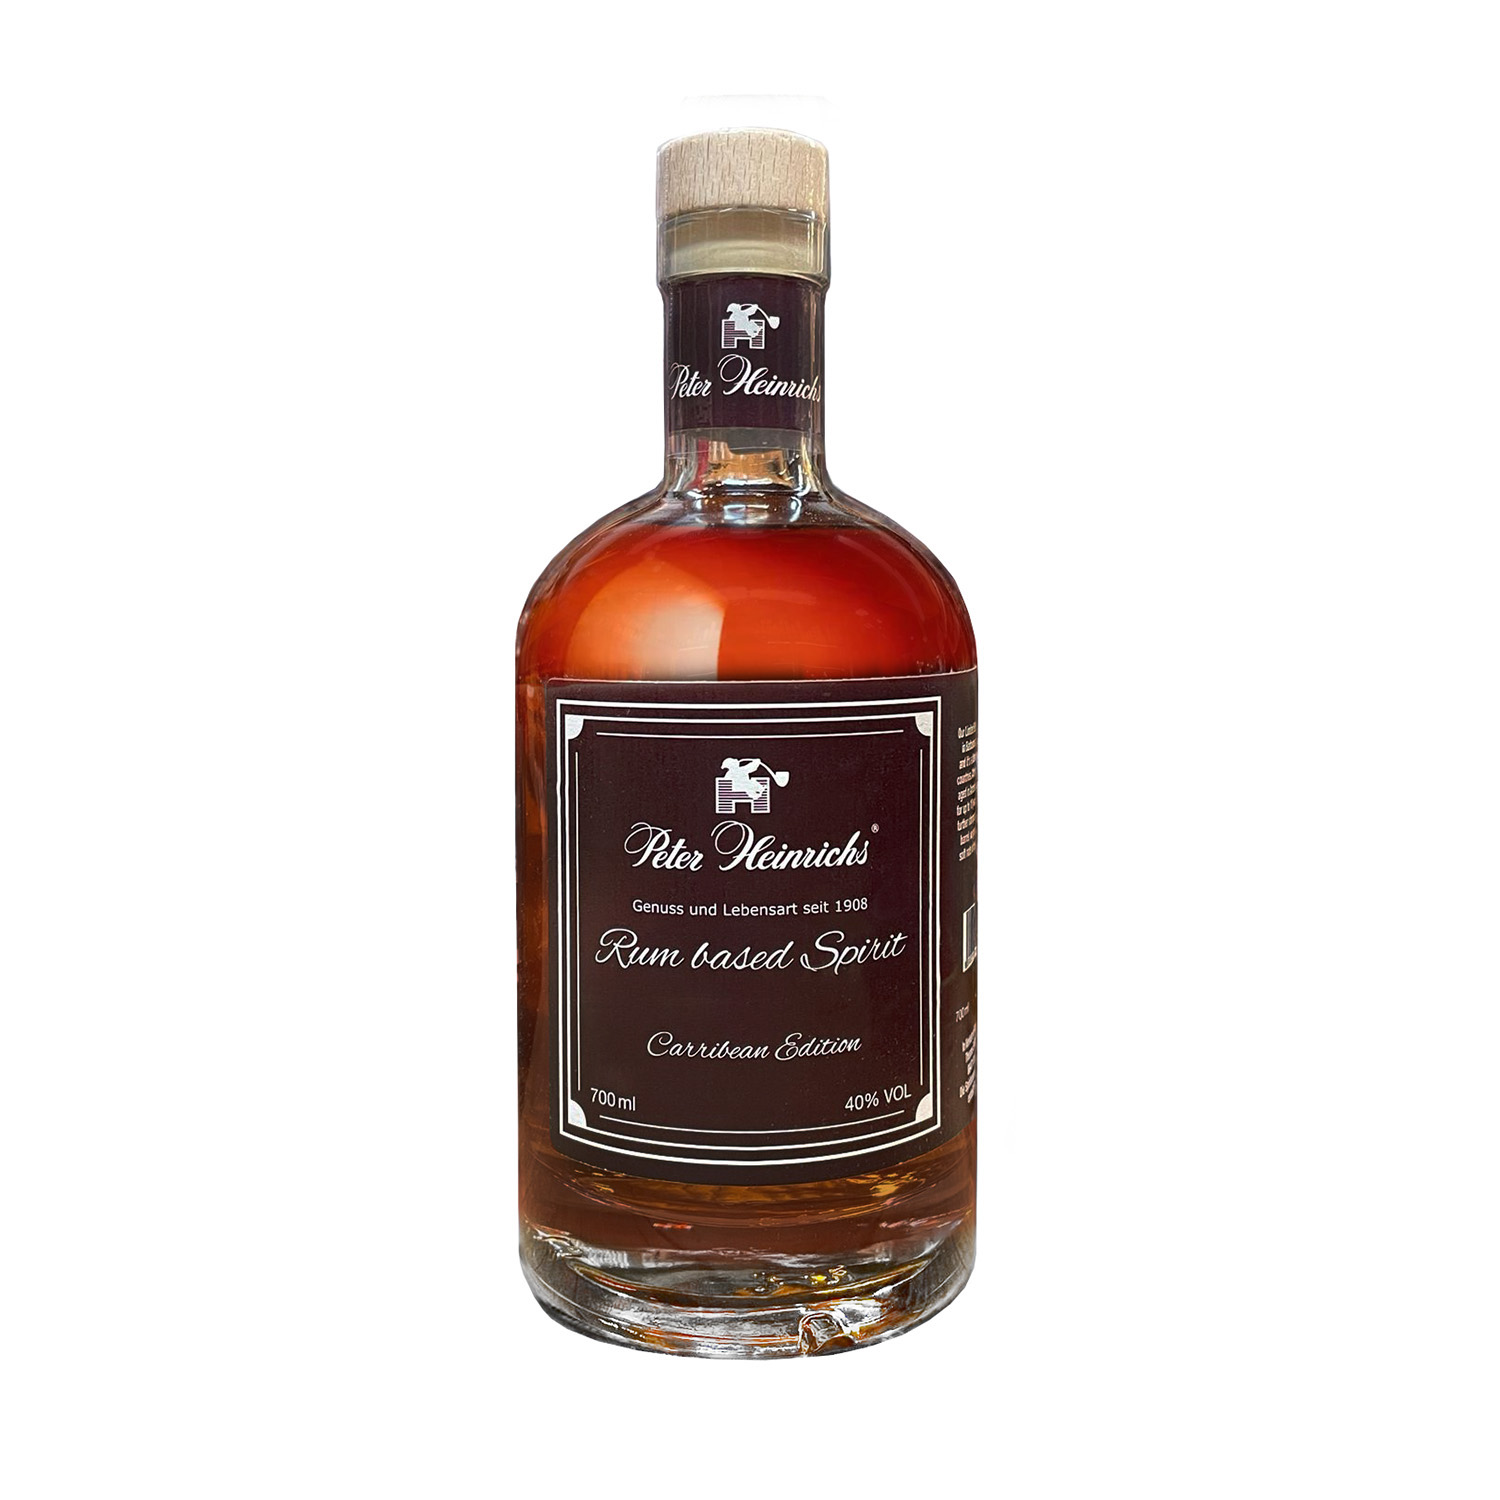 Peter Heinrichs Rum Based Spirit Caribbean Edition